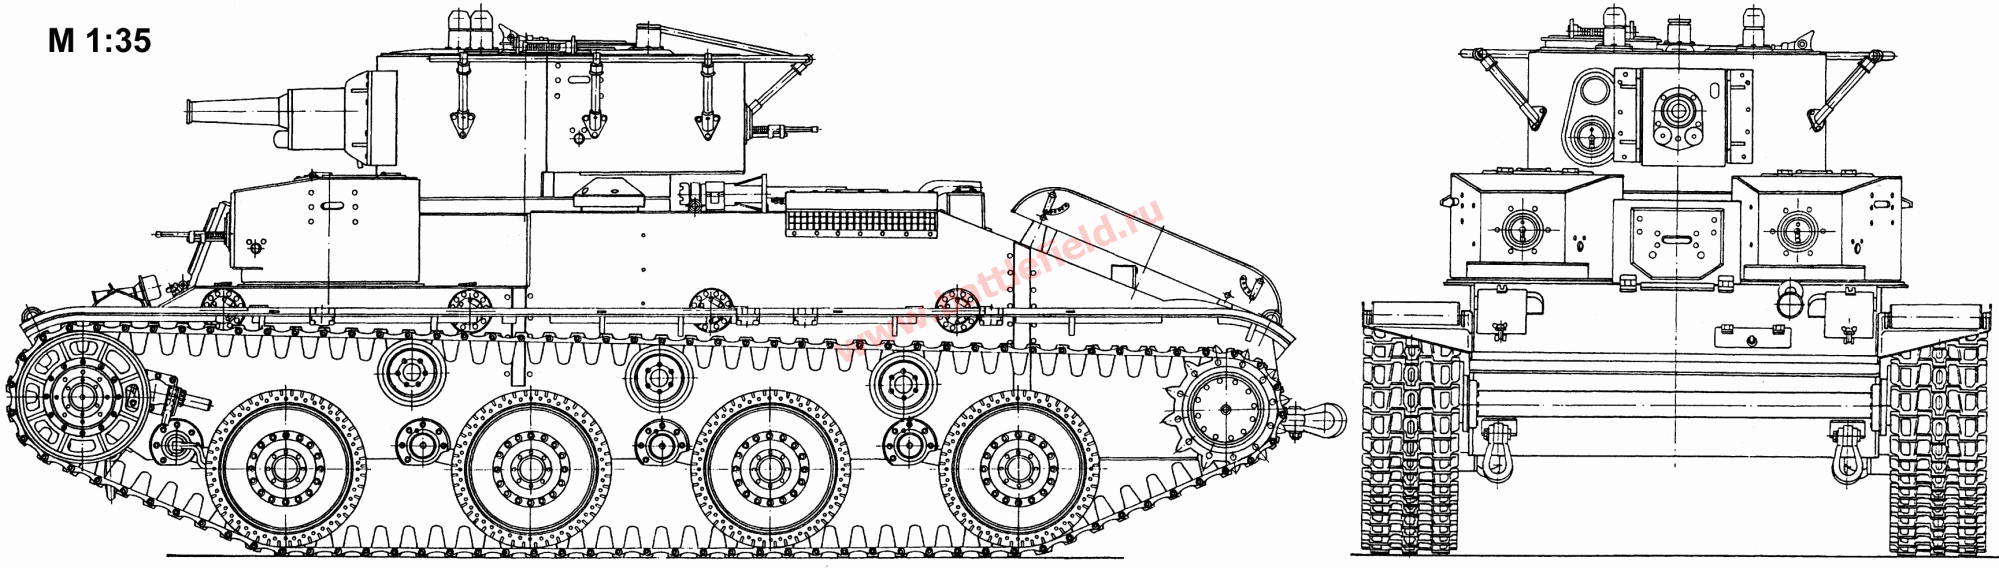 Tanks 29. Т-29 танк. Т-29 танк СССР. Танк т 29 сбоку. Т-29 танк СССР чертежи.